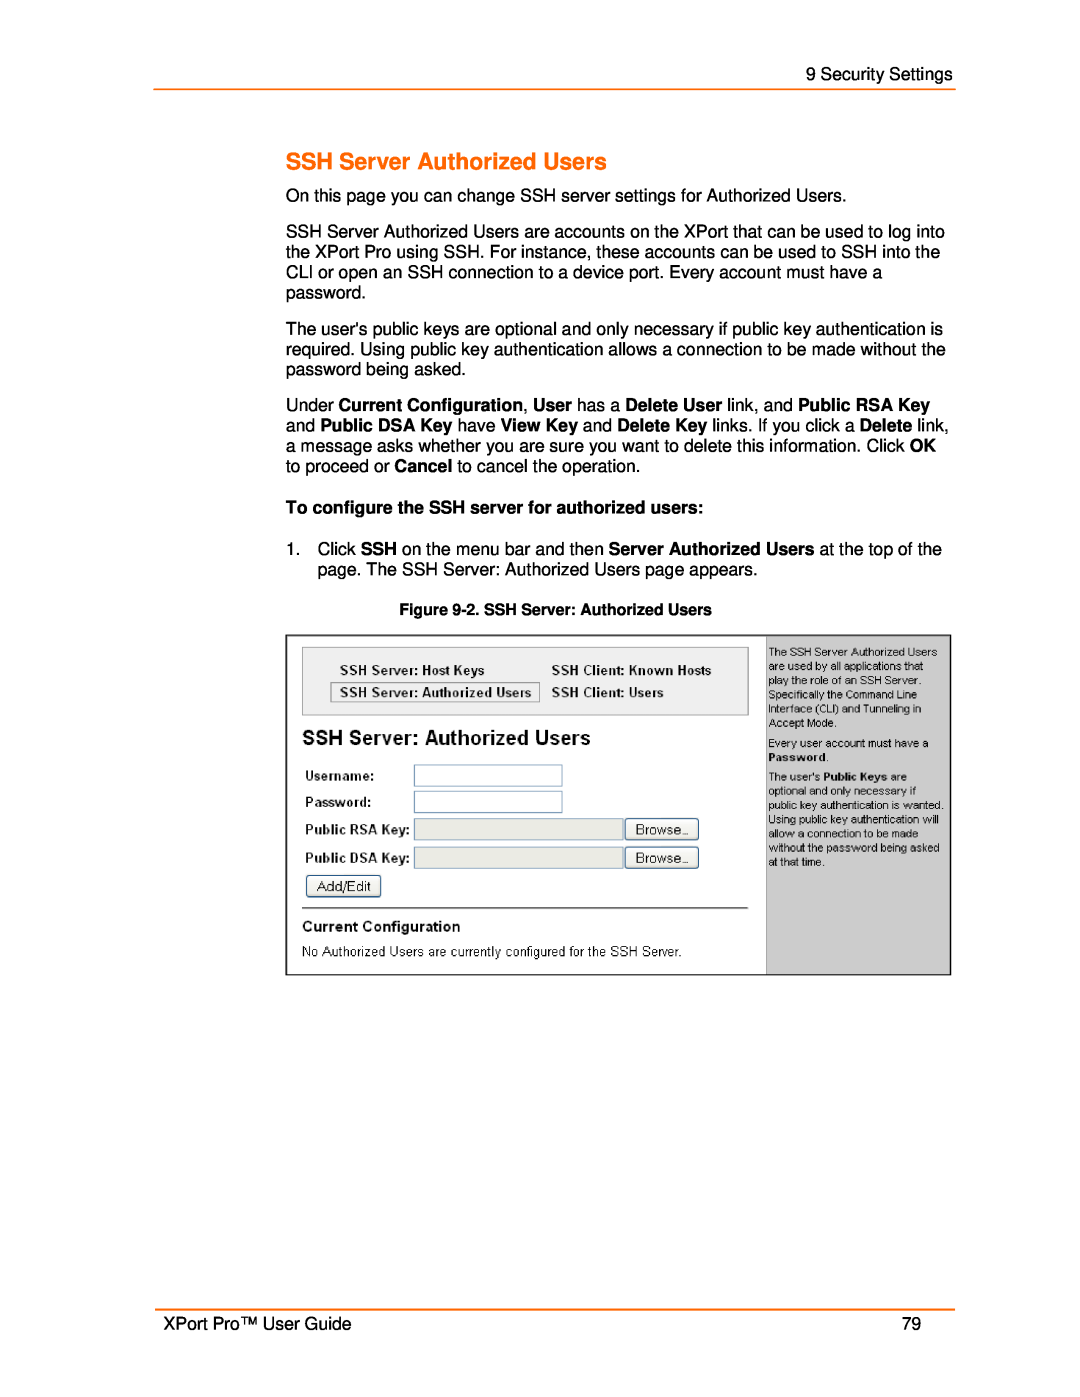 Lantronix 900-560 manual SSH Server Authorized Users 